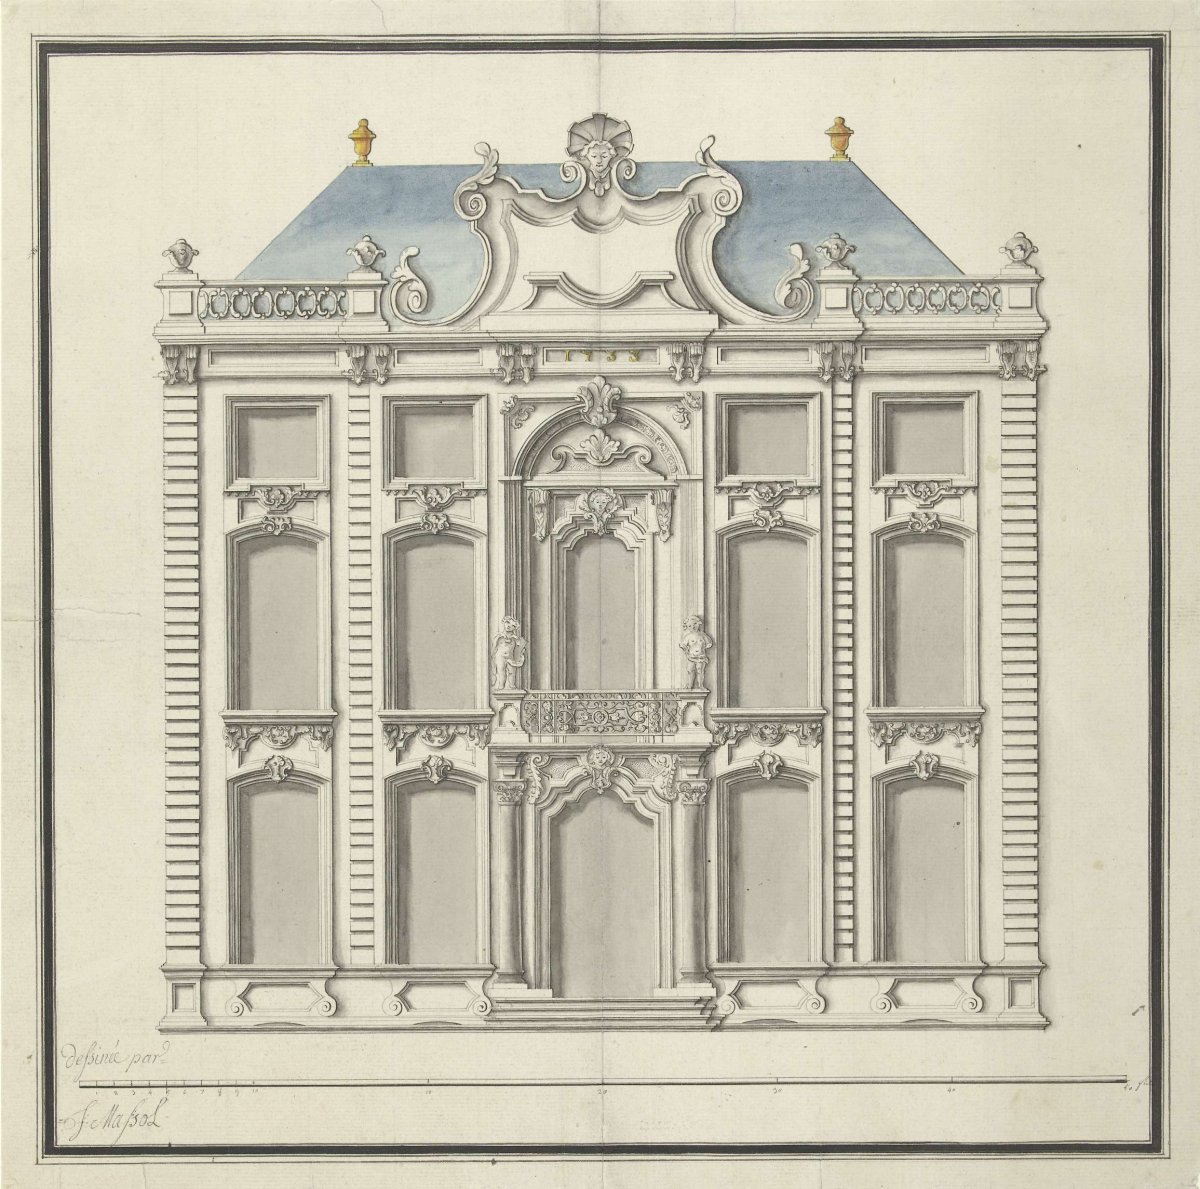 First name residence with flat sidewalk, Joseph Massol, 1752 - 1767